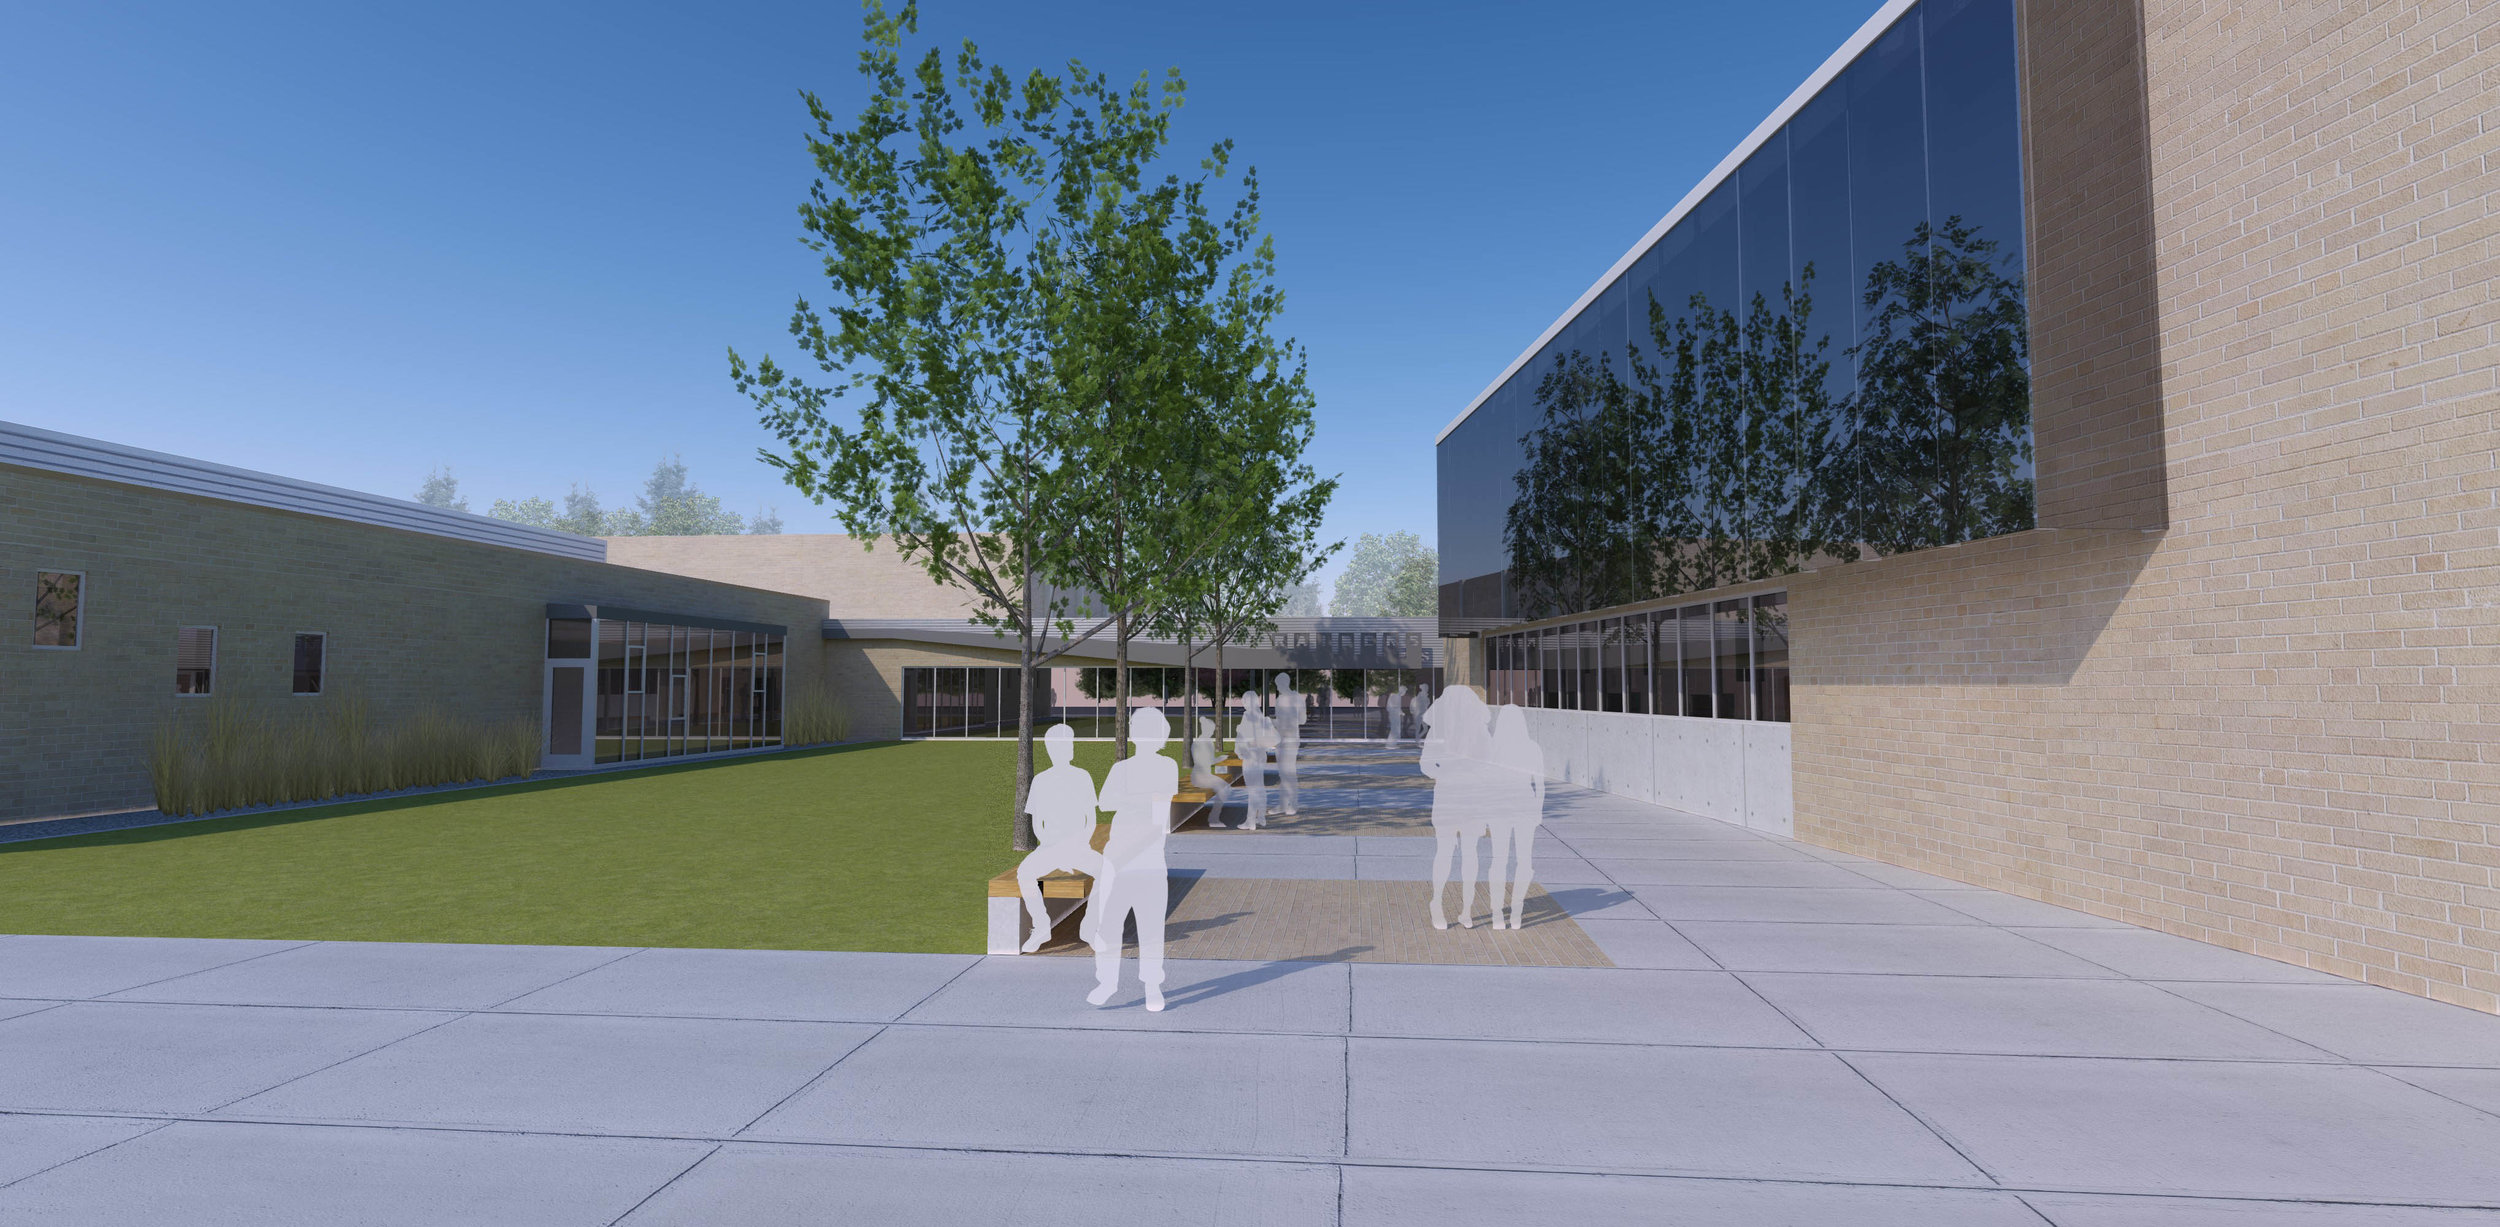 Courtyard View - Richardton-Taylor High School Addition and Renovation